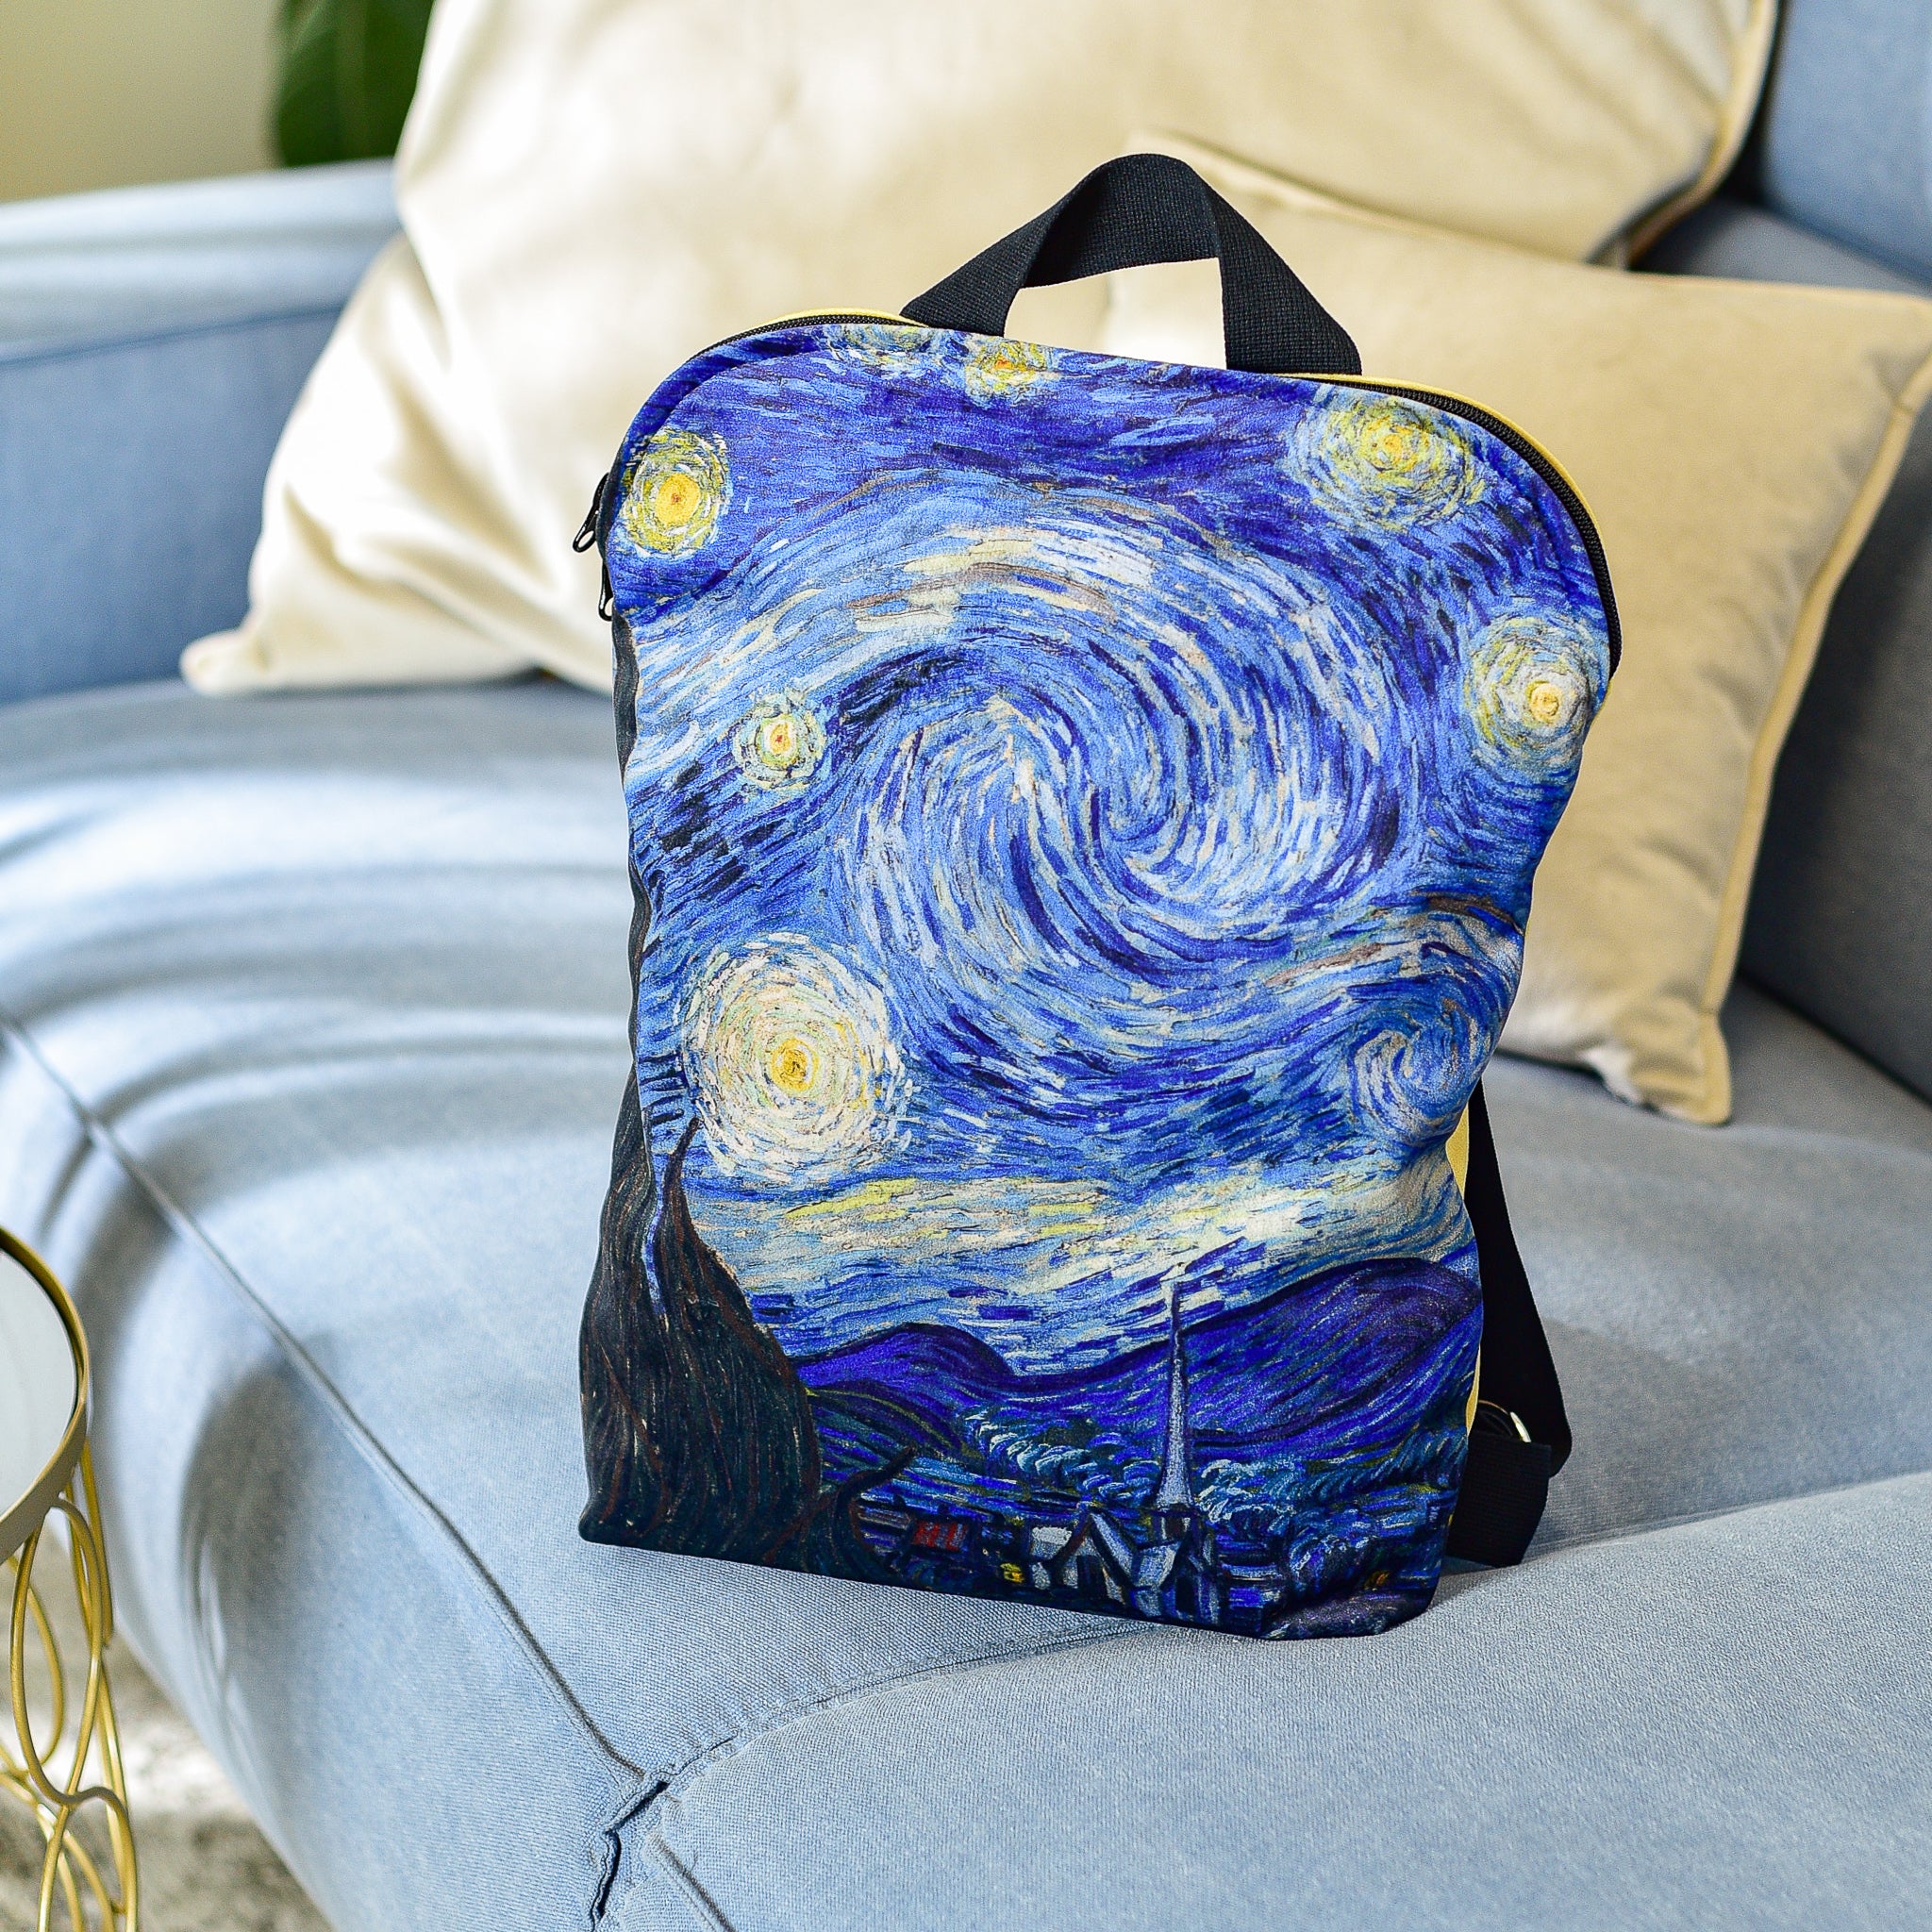 Kuprinė Vincent van Gogh "The Starry Night"